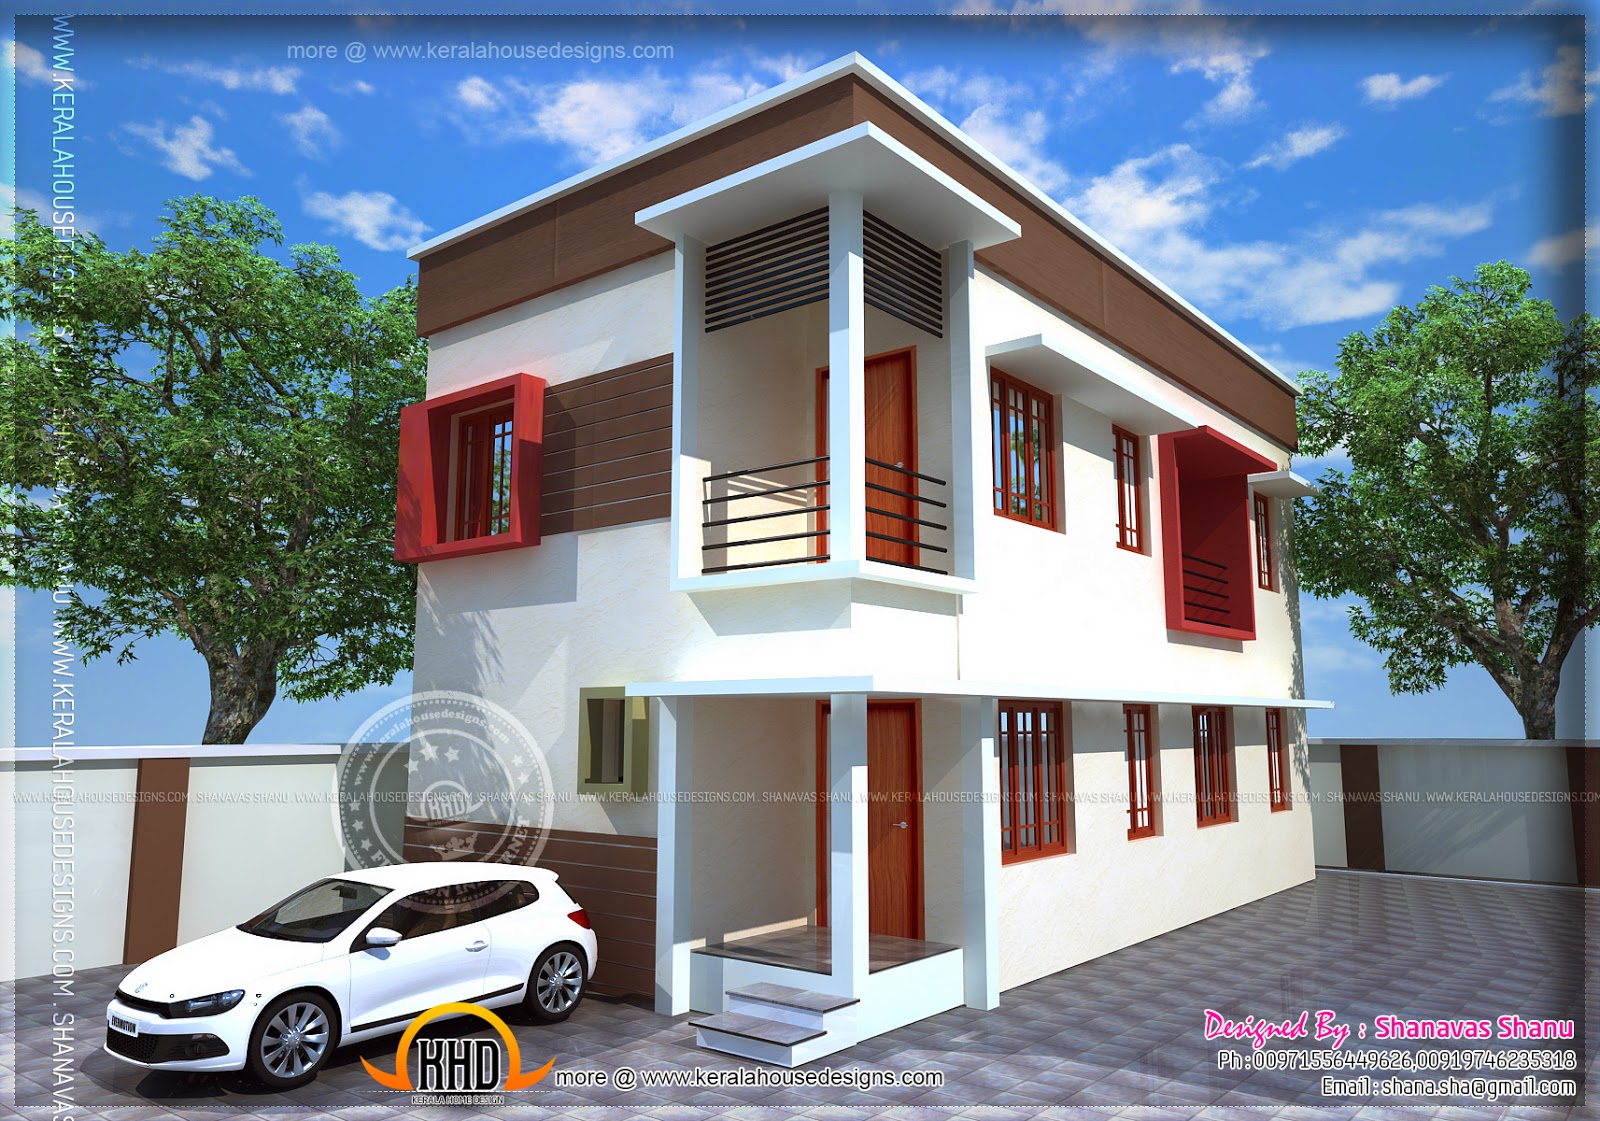 Small plot villa in 2.75 cents of land - Kerala home design and ... - Small plot villa elevation